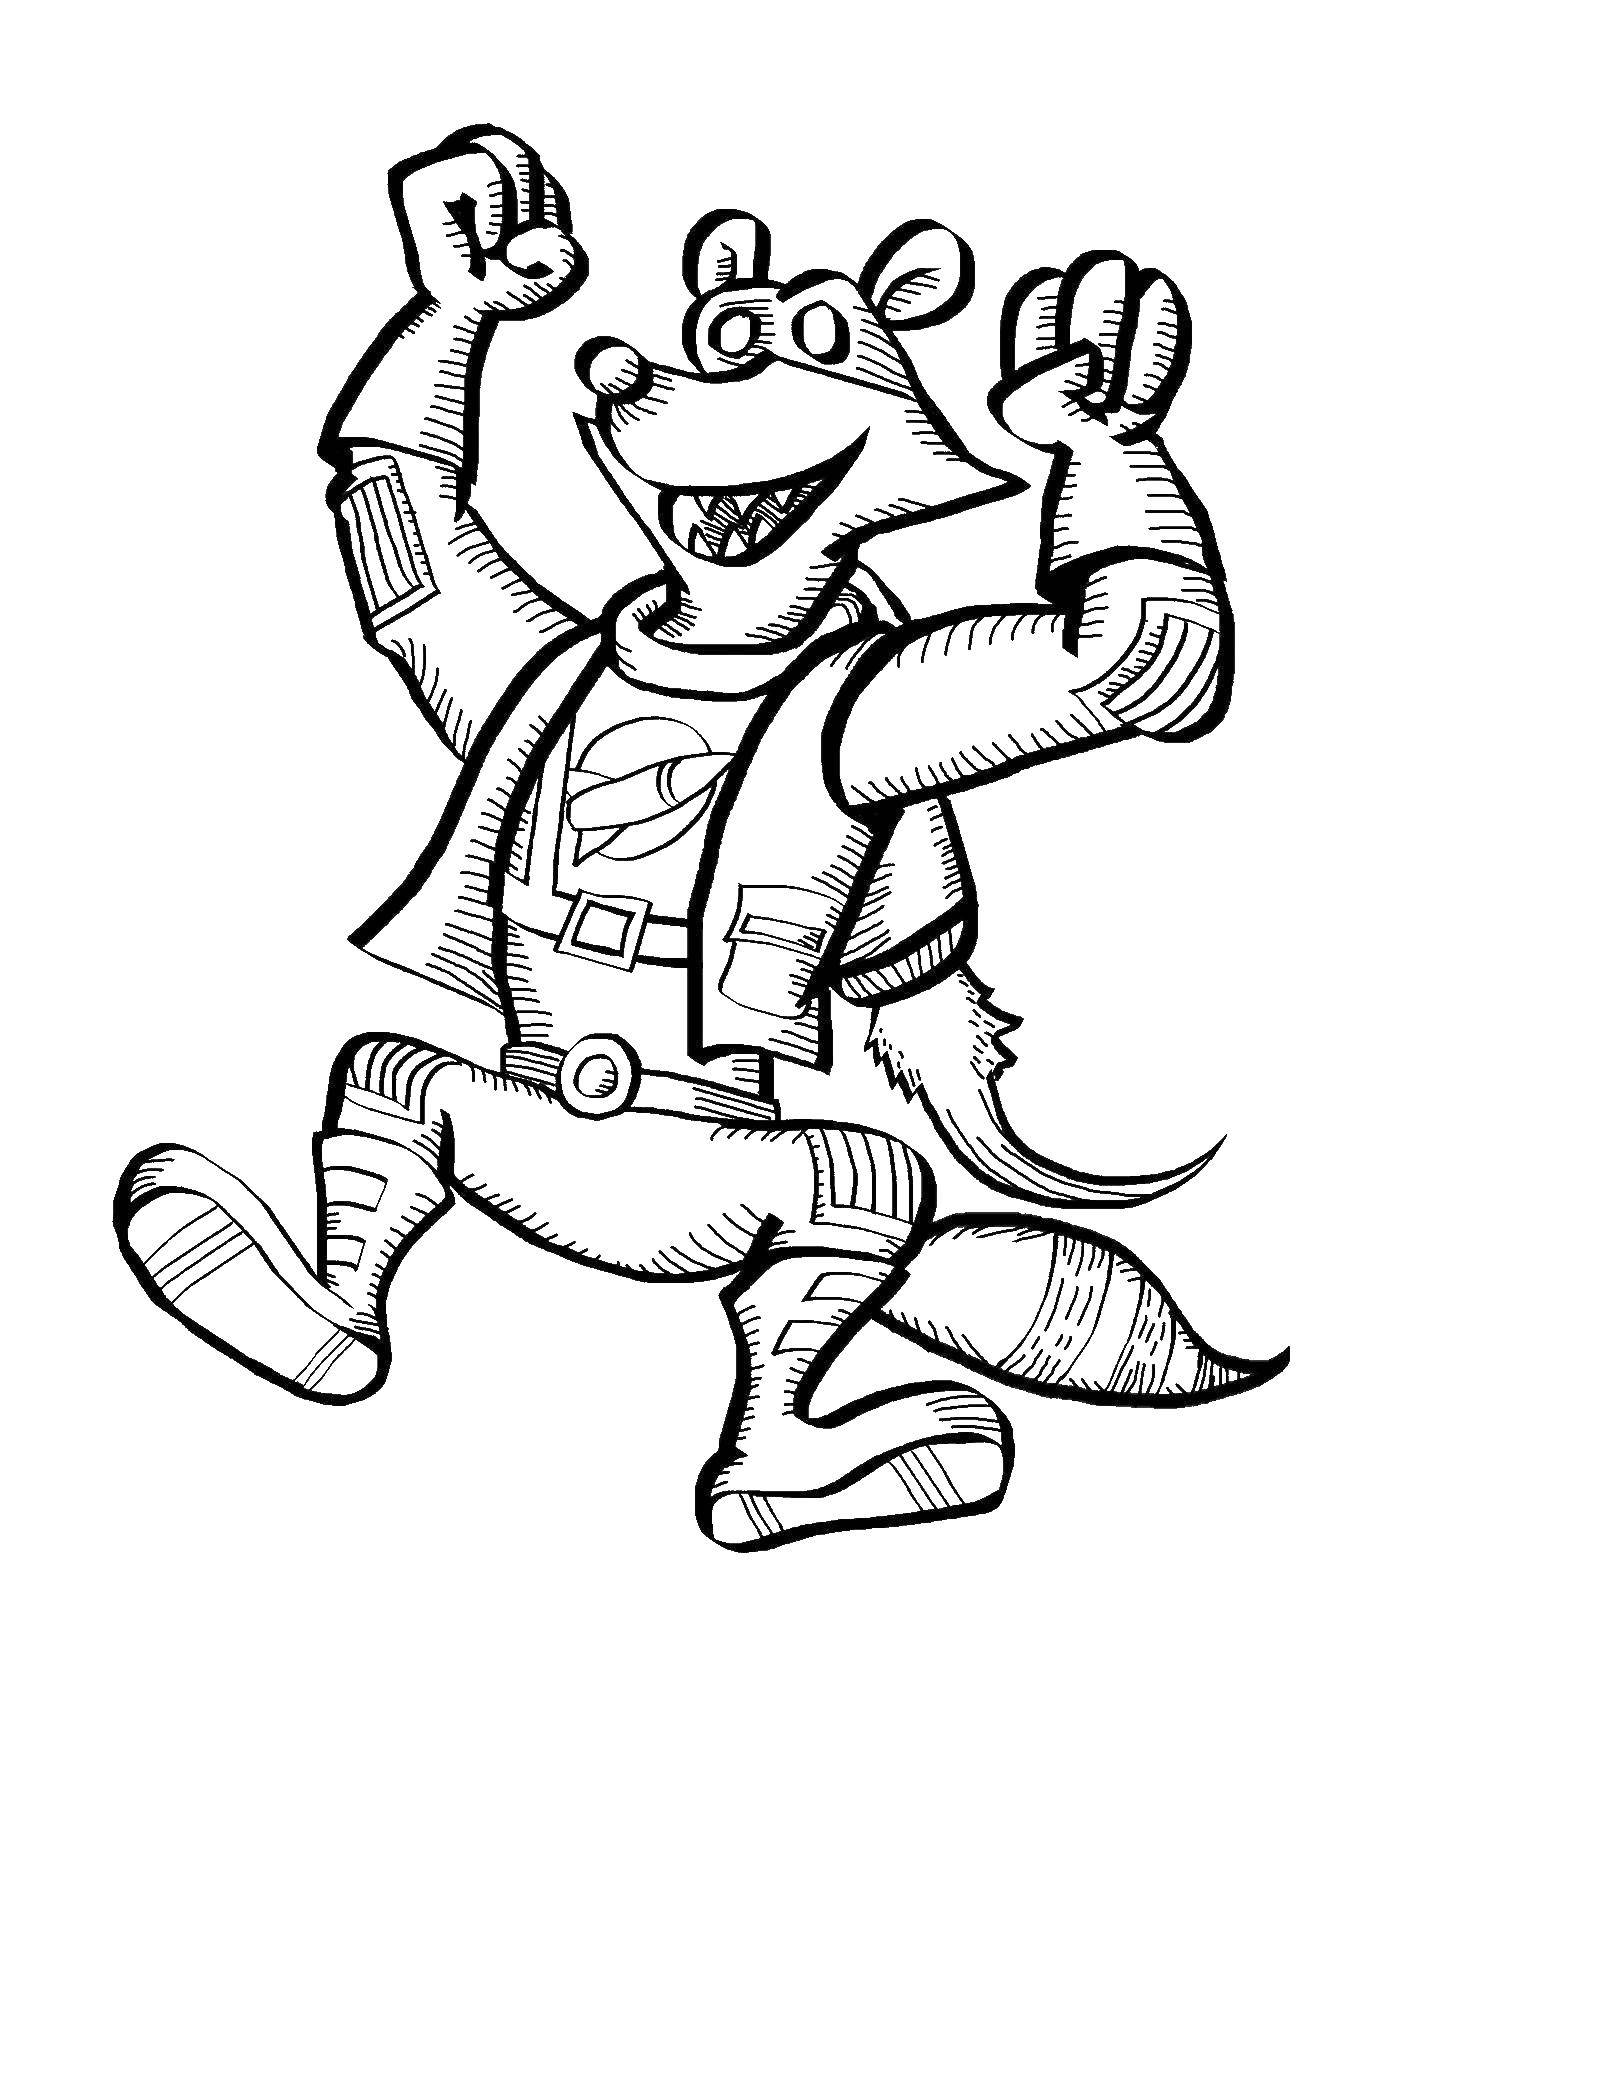 Coloring Super raccoon. Category superheroes. Tags:  super raccoon.